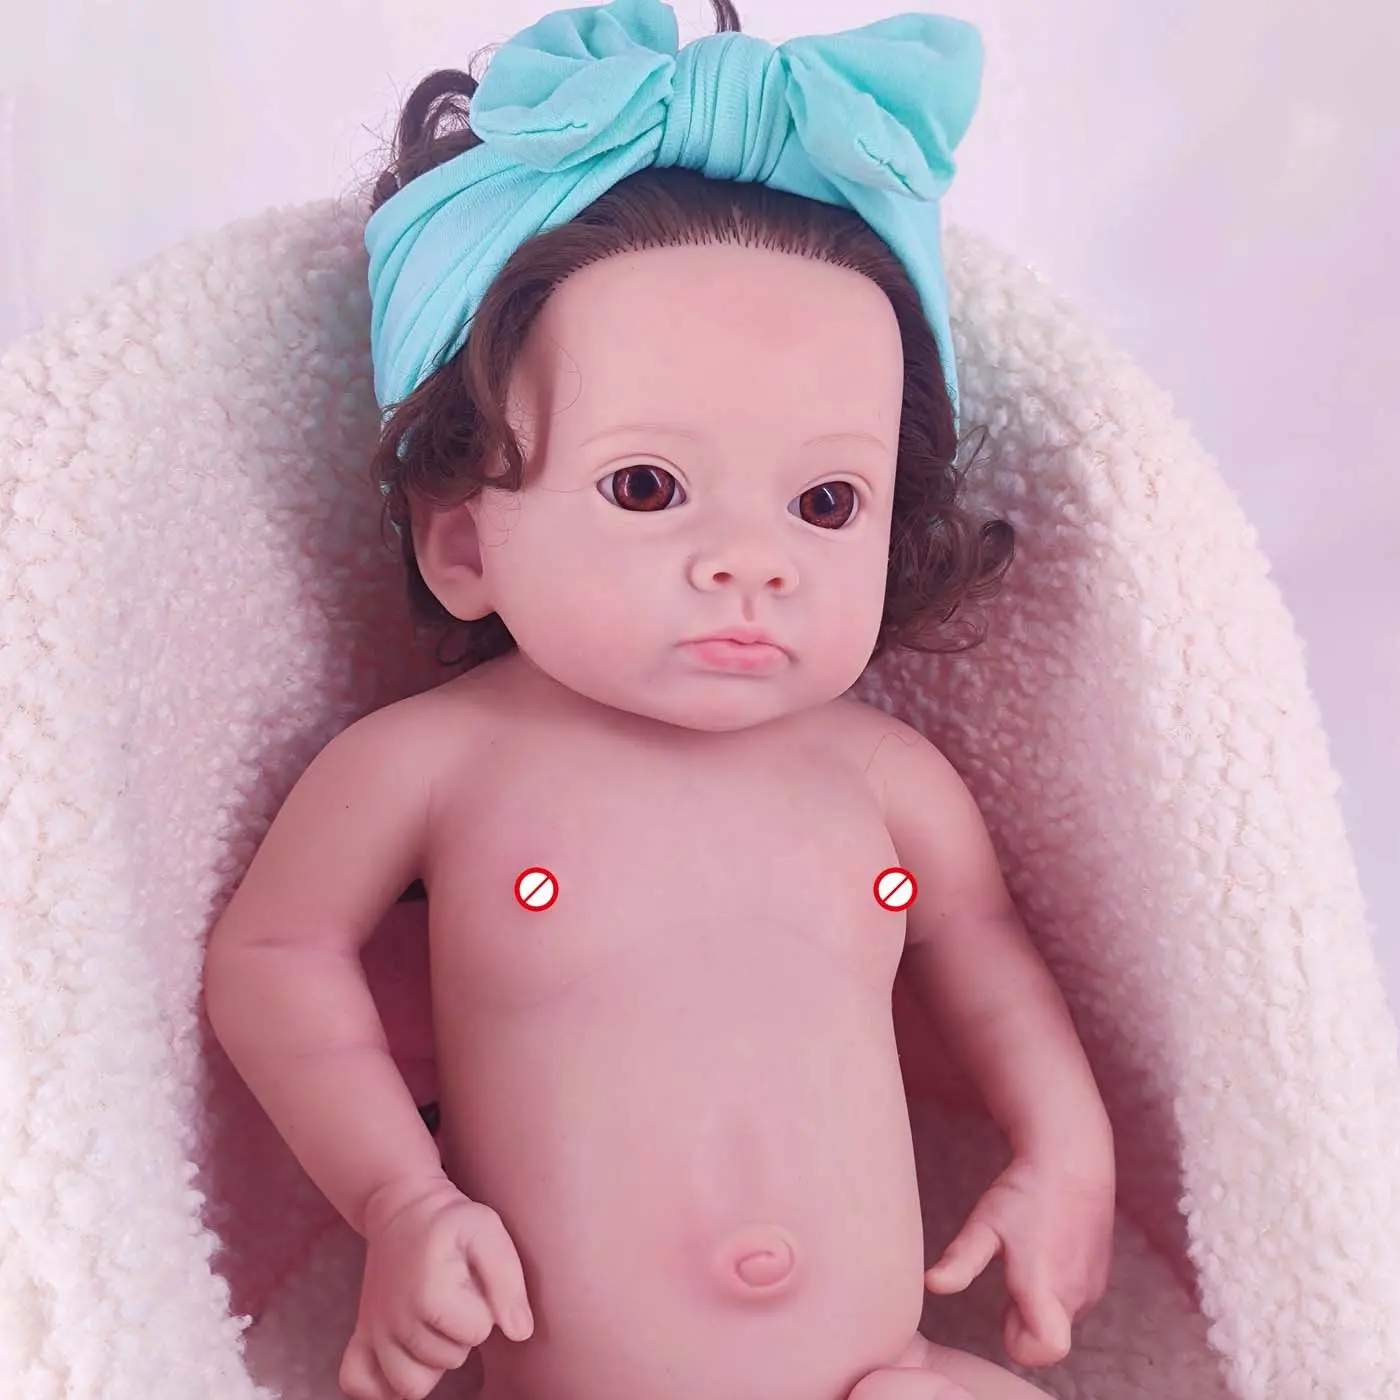 Realistic Full Body Silicone Babi Doll Newborn Soft Lifelike Bonecas Renascidas Bebe Cuerpo Completo De Silicona